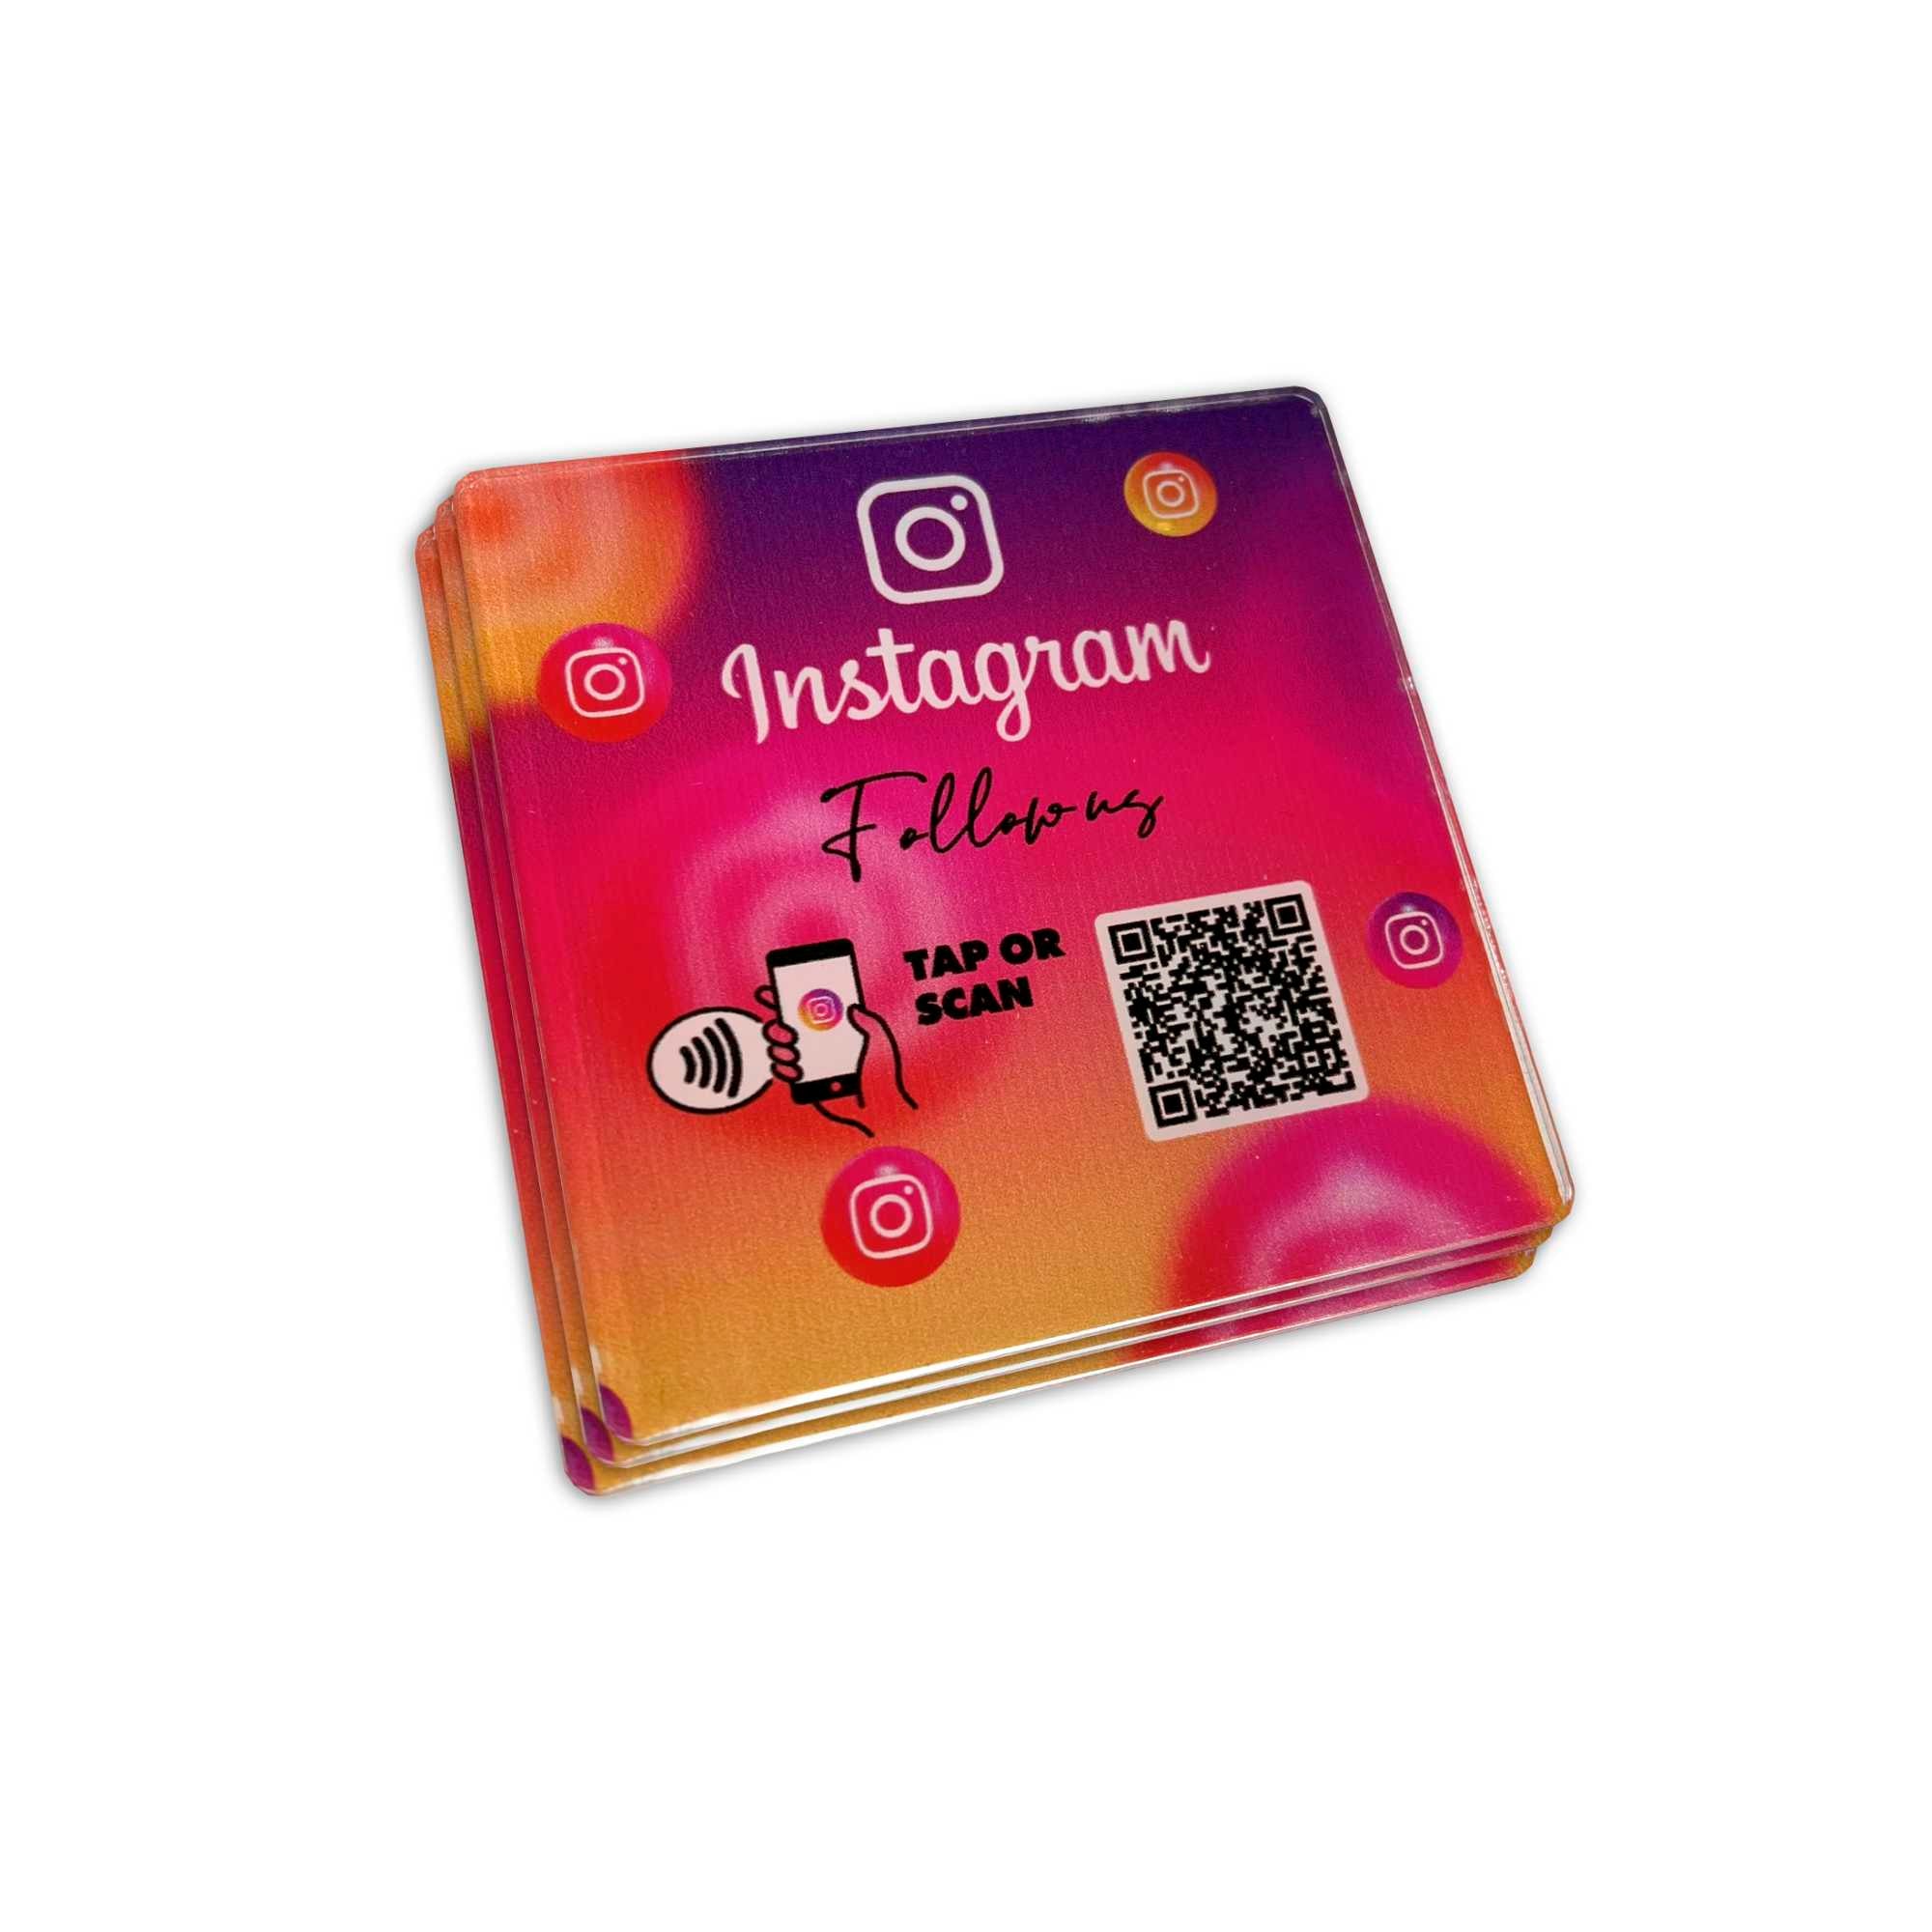 Smart-Tap, Instagram table Coaster με NFC/QR Code χωρίς λογότυπο. Σχέδιο 4. Σετ 3 τεμαχίων